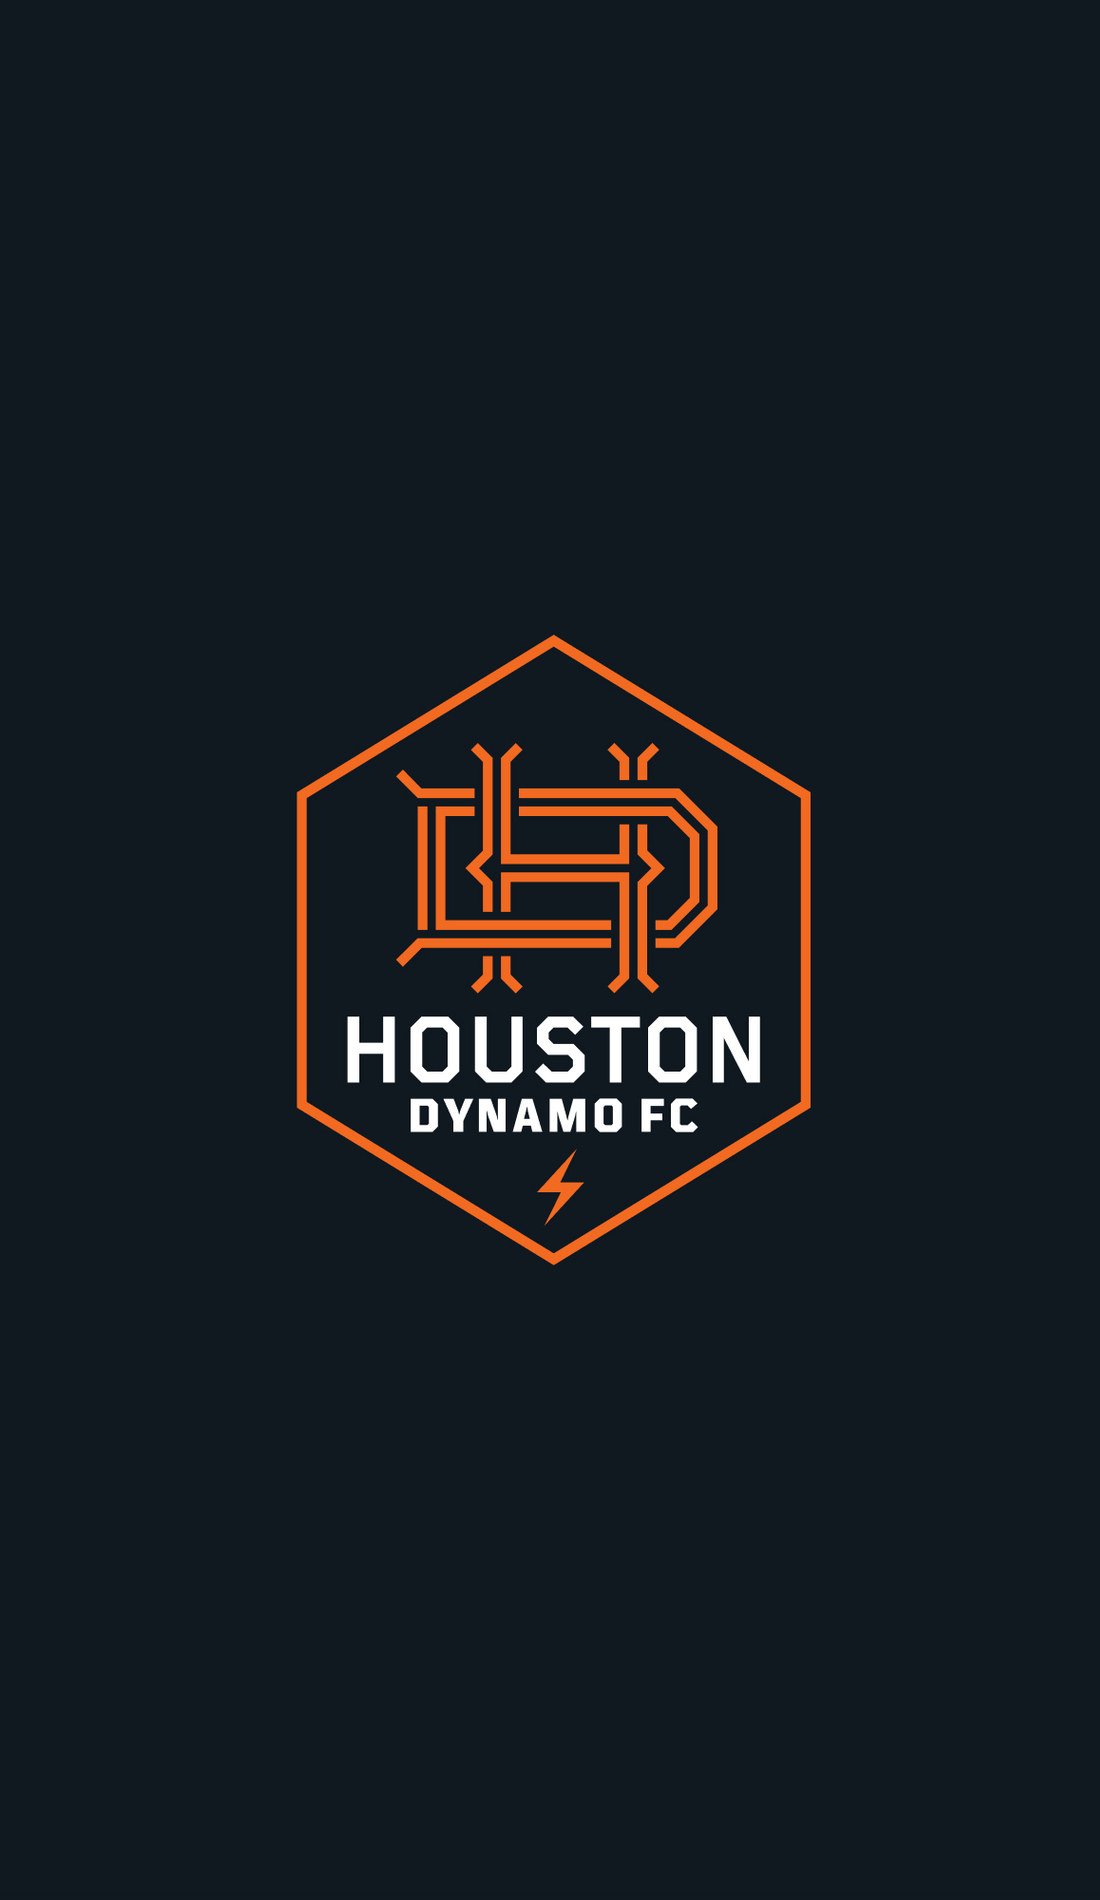 A Houston Dynamo FC live event